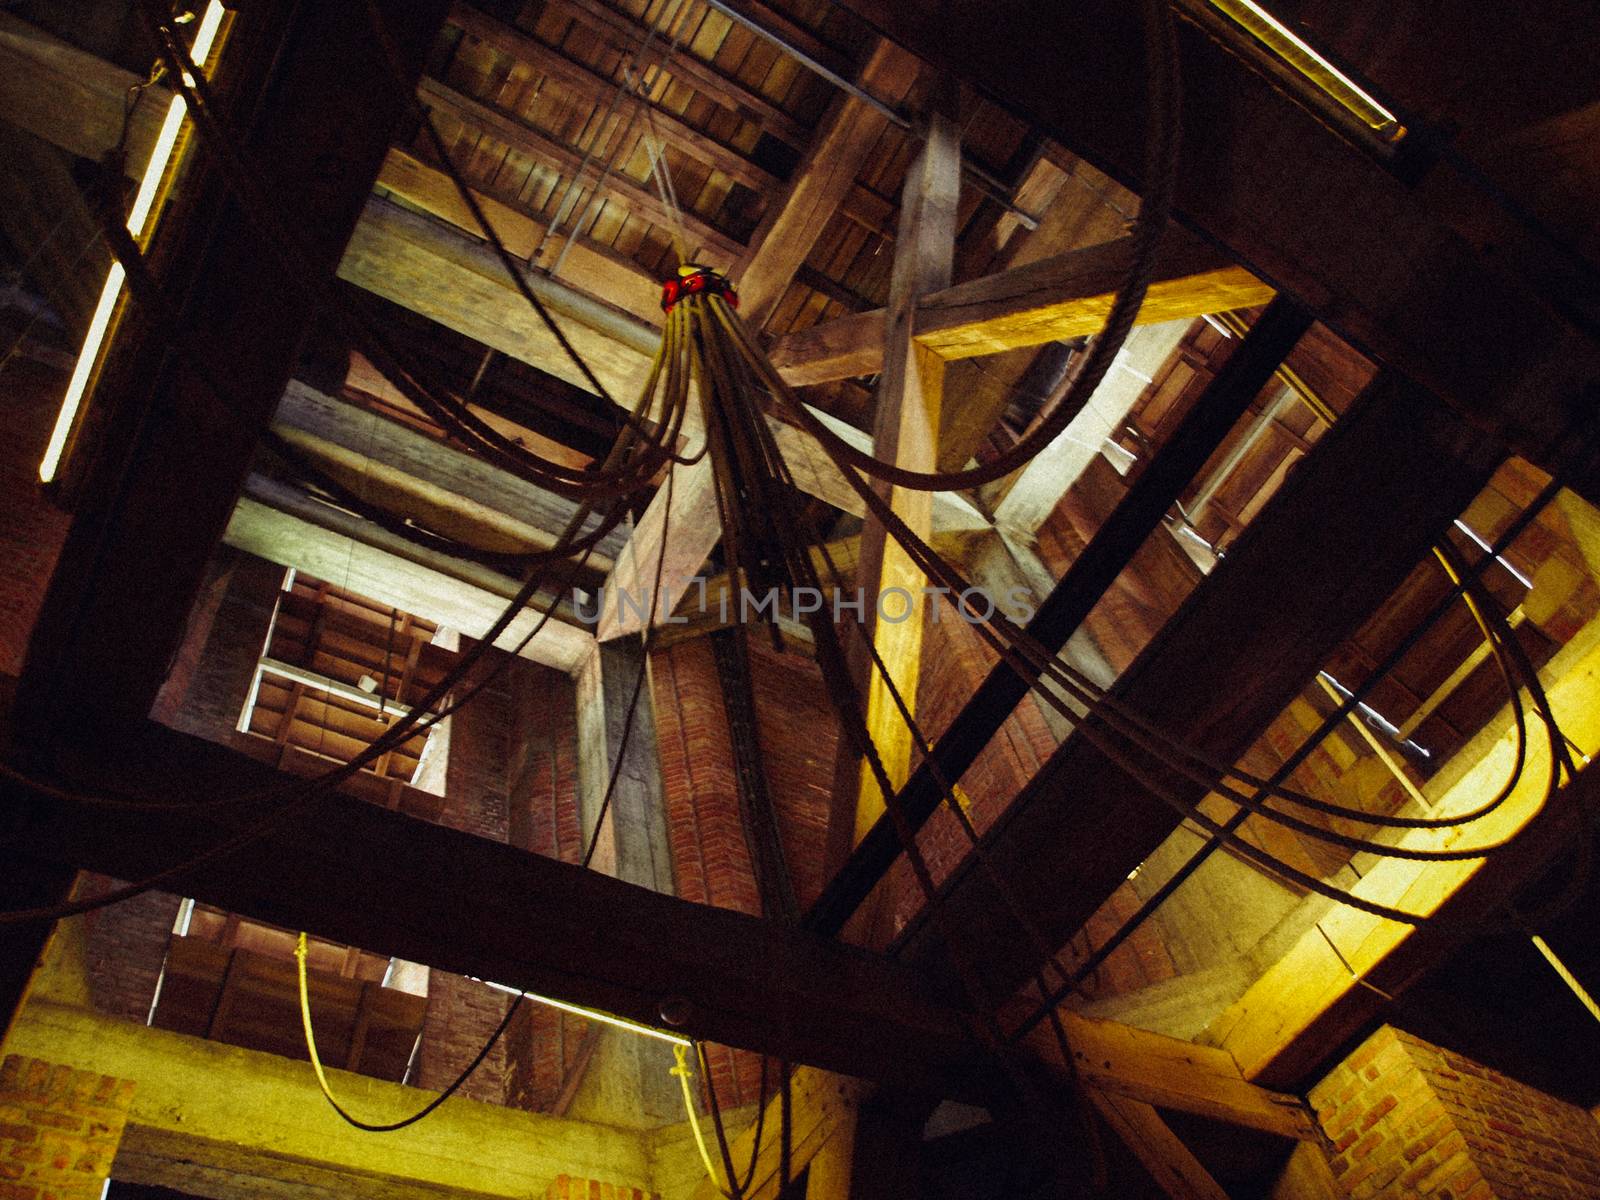 Belfry interior in old village bell tower, wooden beams, stair, bells at Netherlands